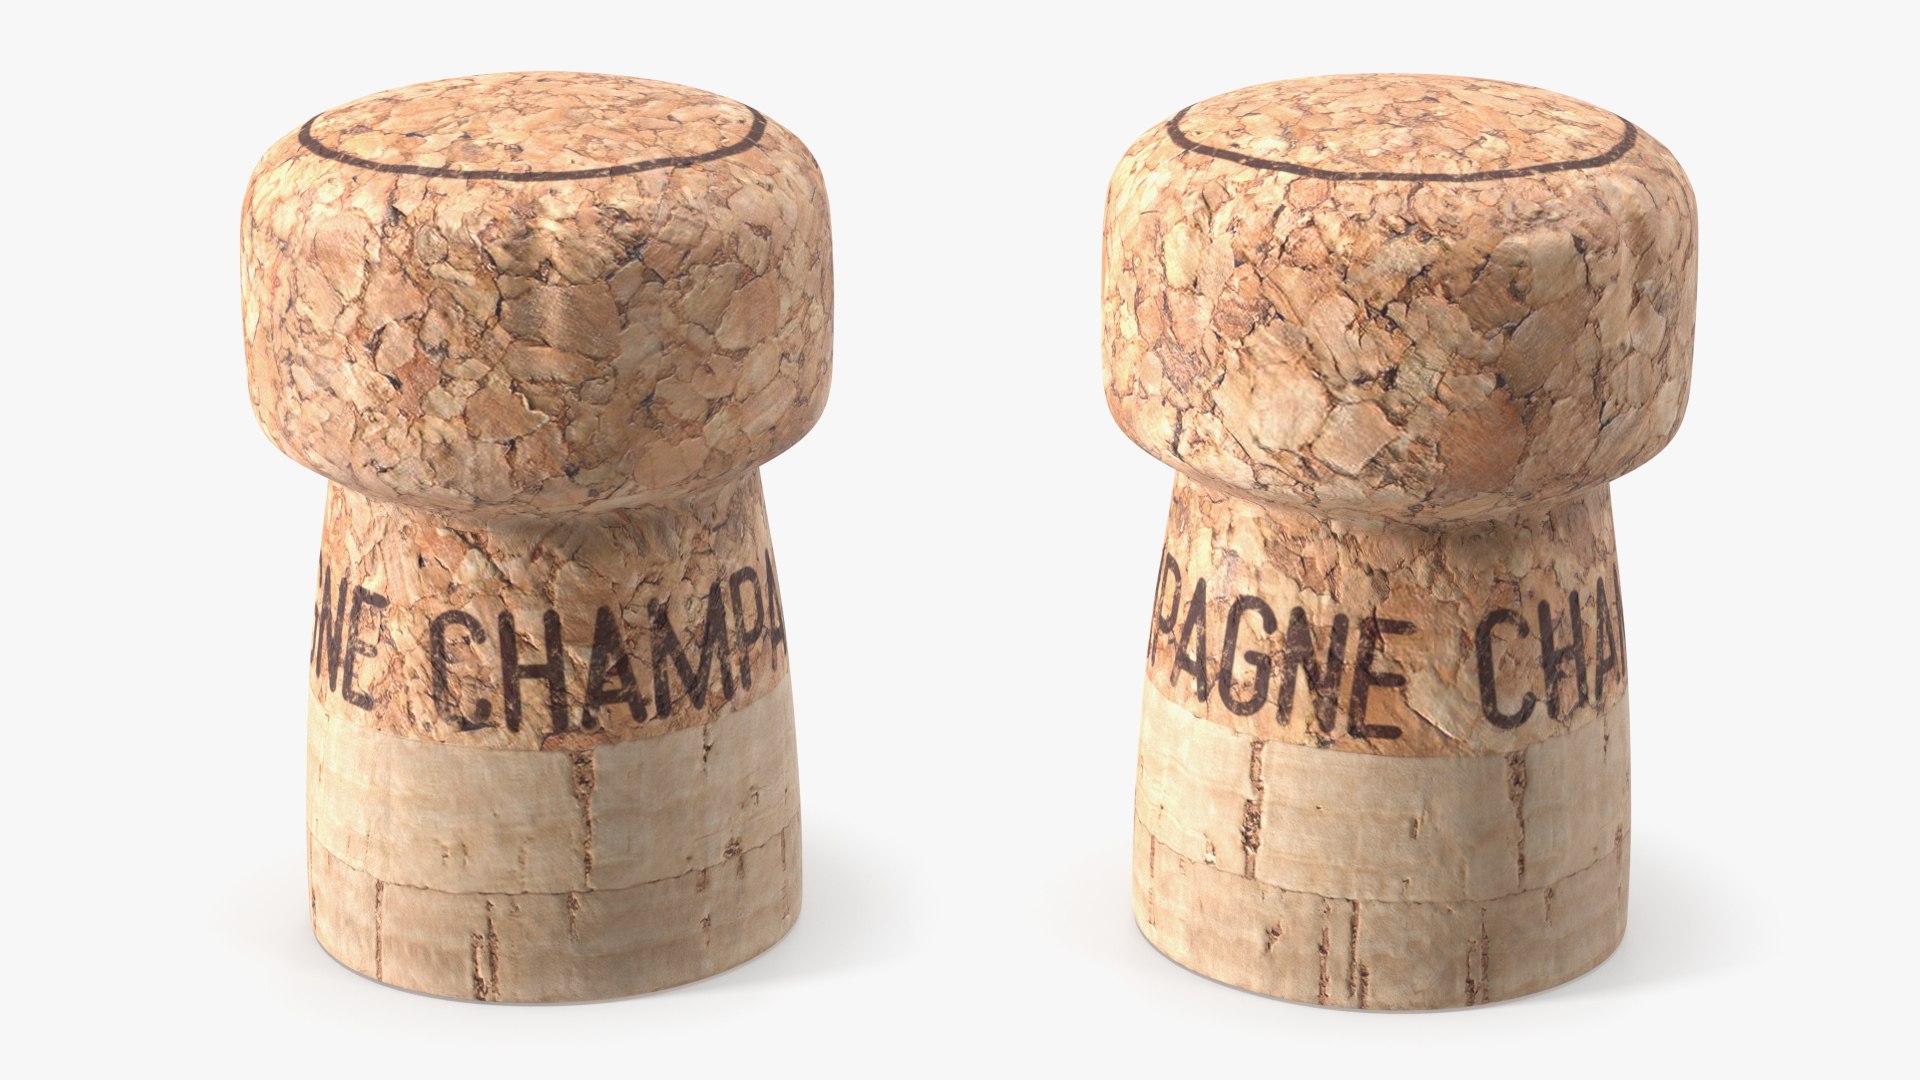 Champagne Cork: 3 piece #13 cork